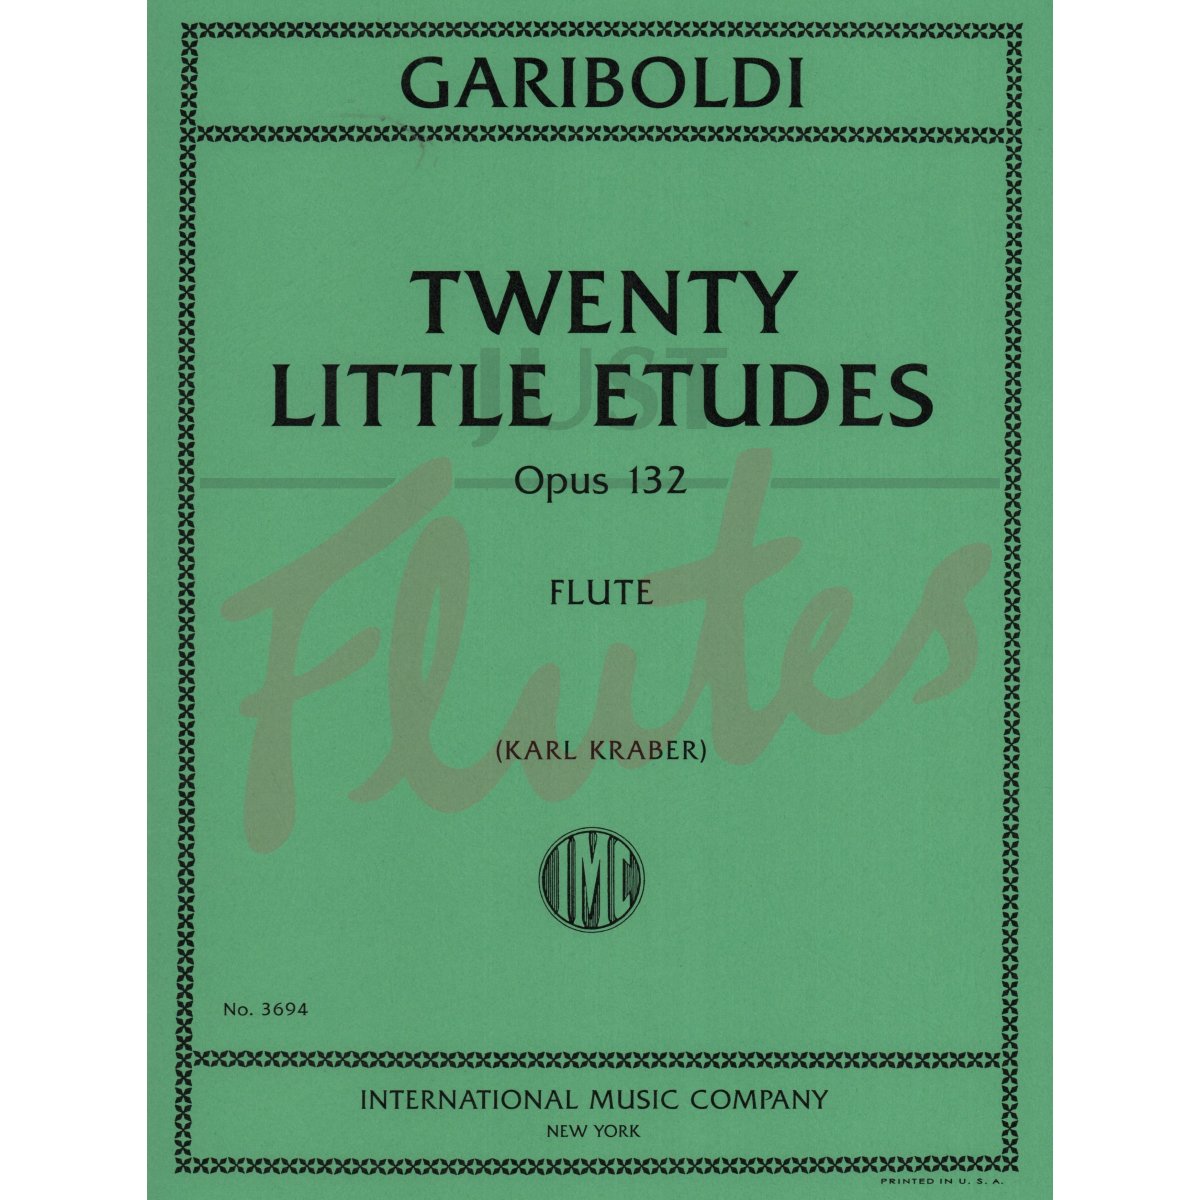 Twenty Little Etudes for Flute